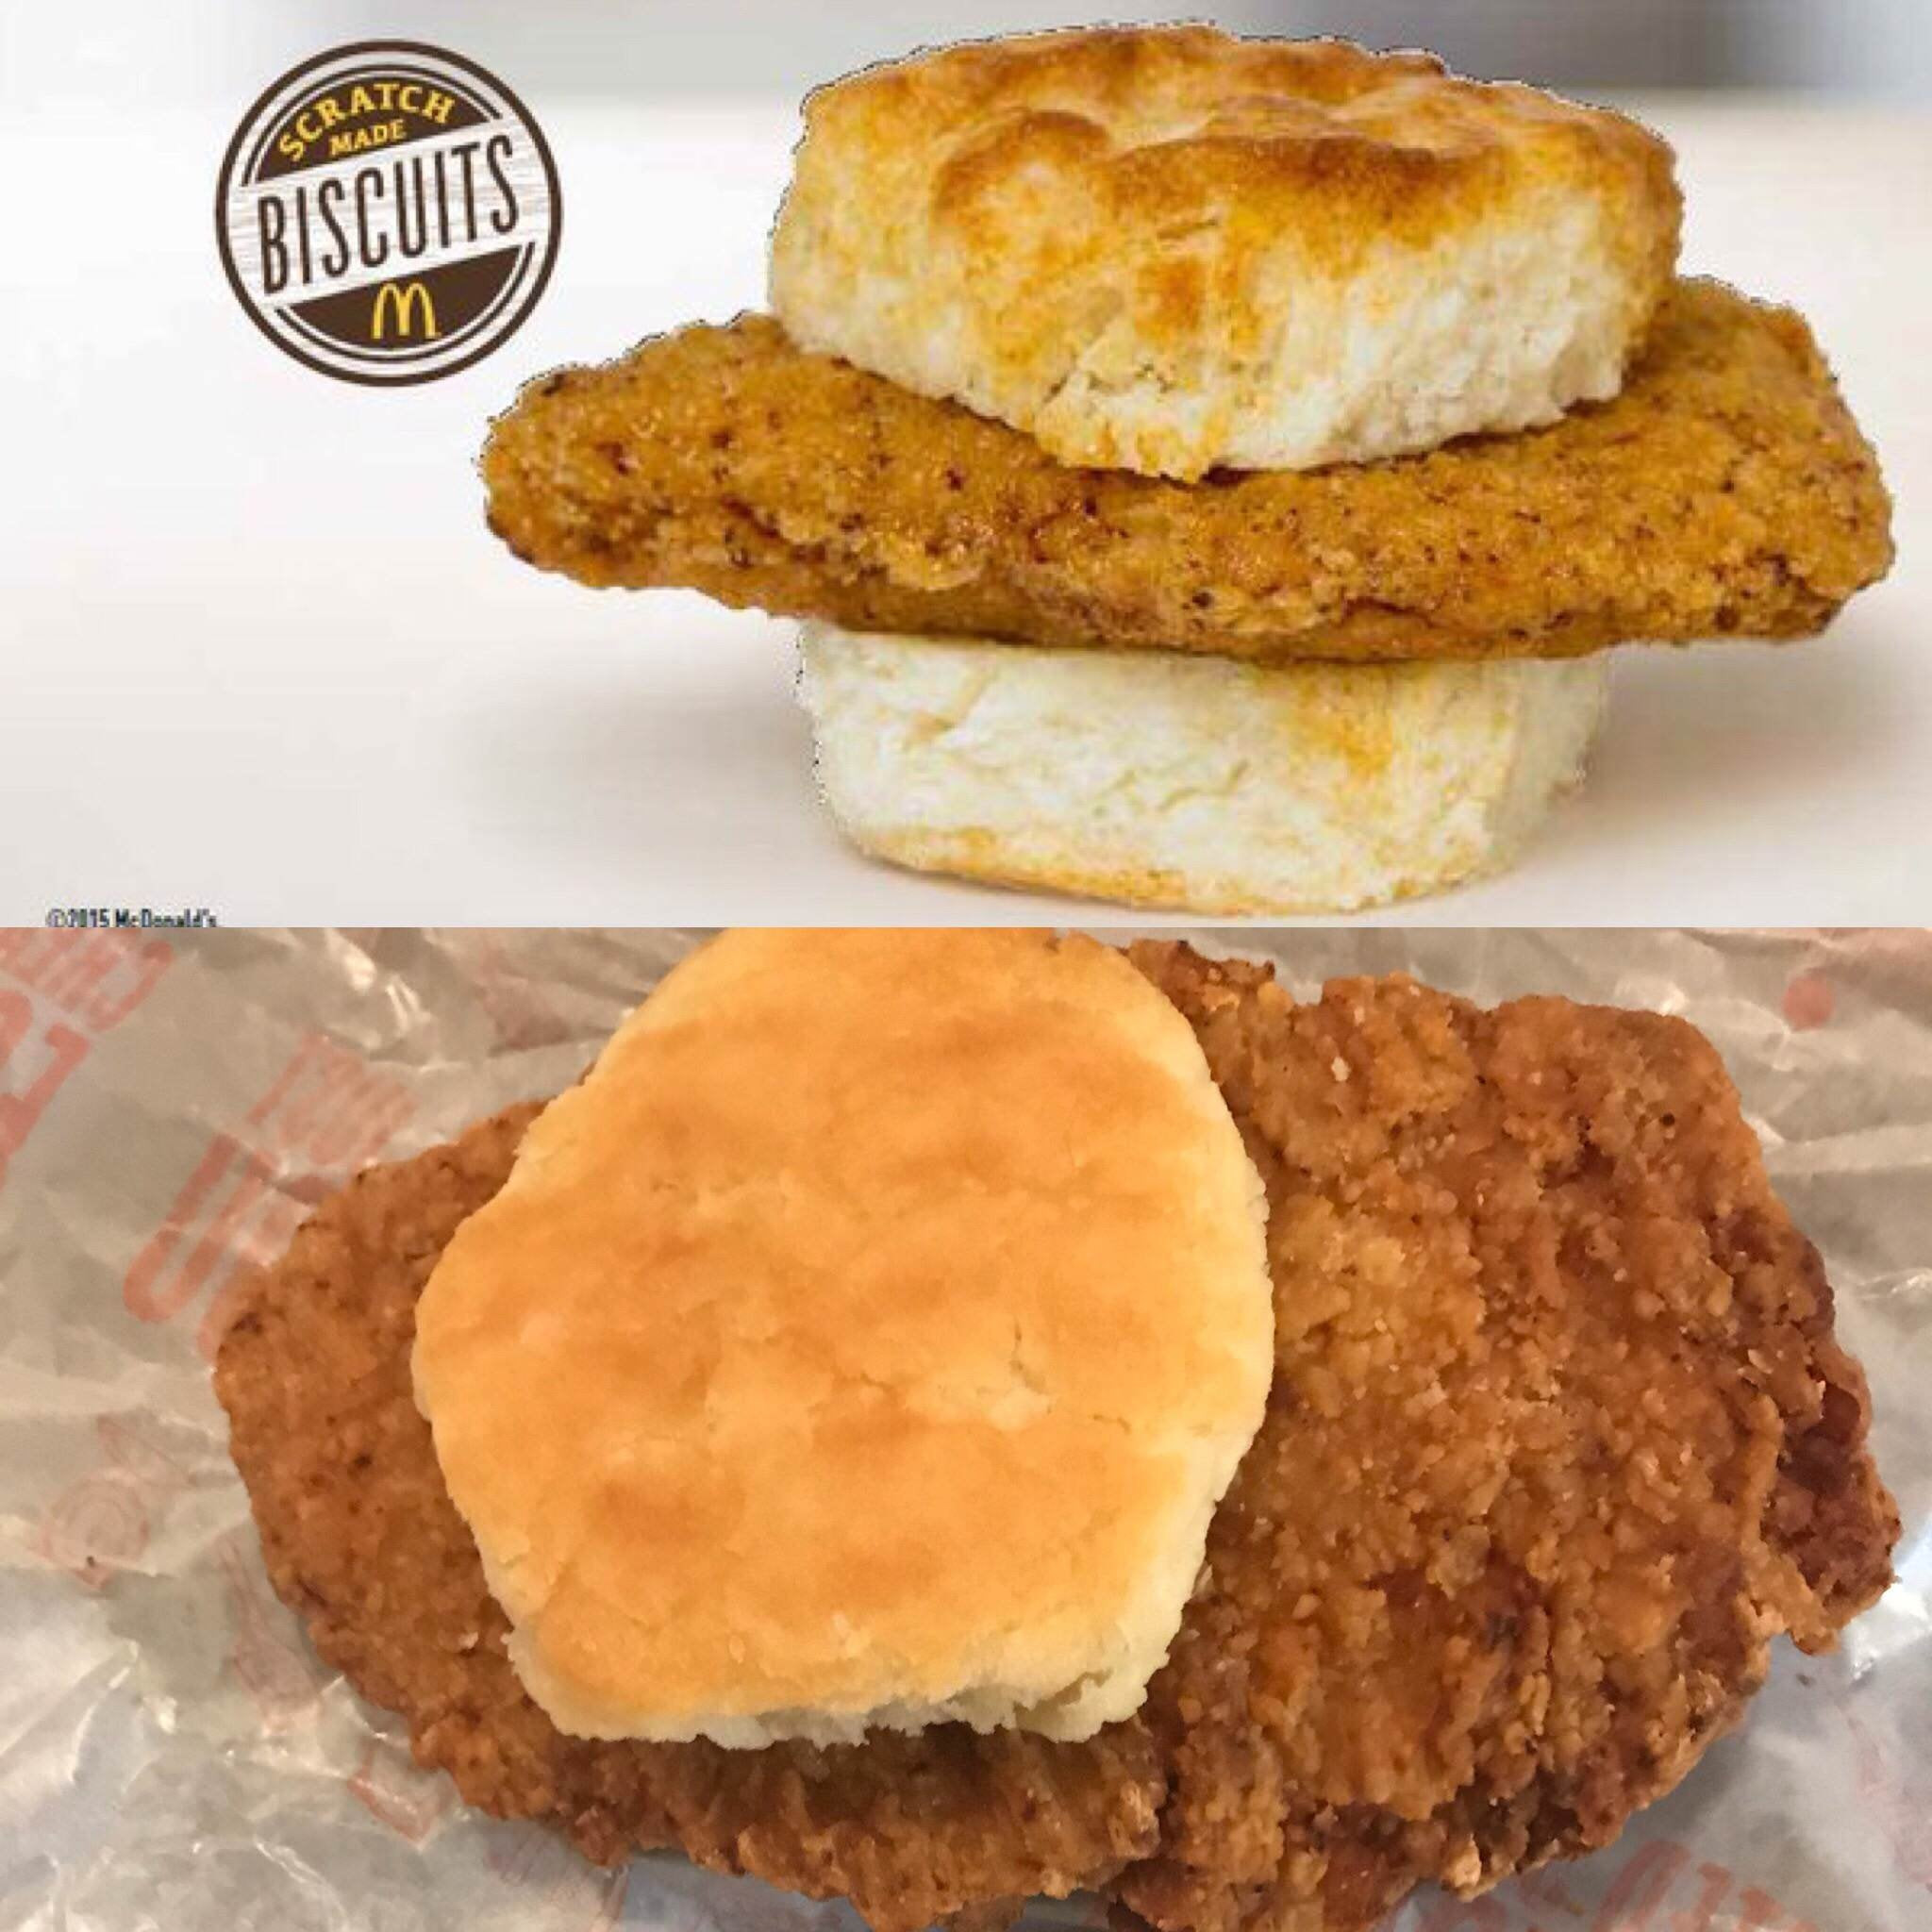 Mcdonalds Chicken Biscuit
 My McDonald’s chicken biscuit this morning